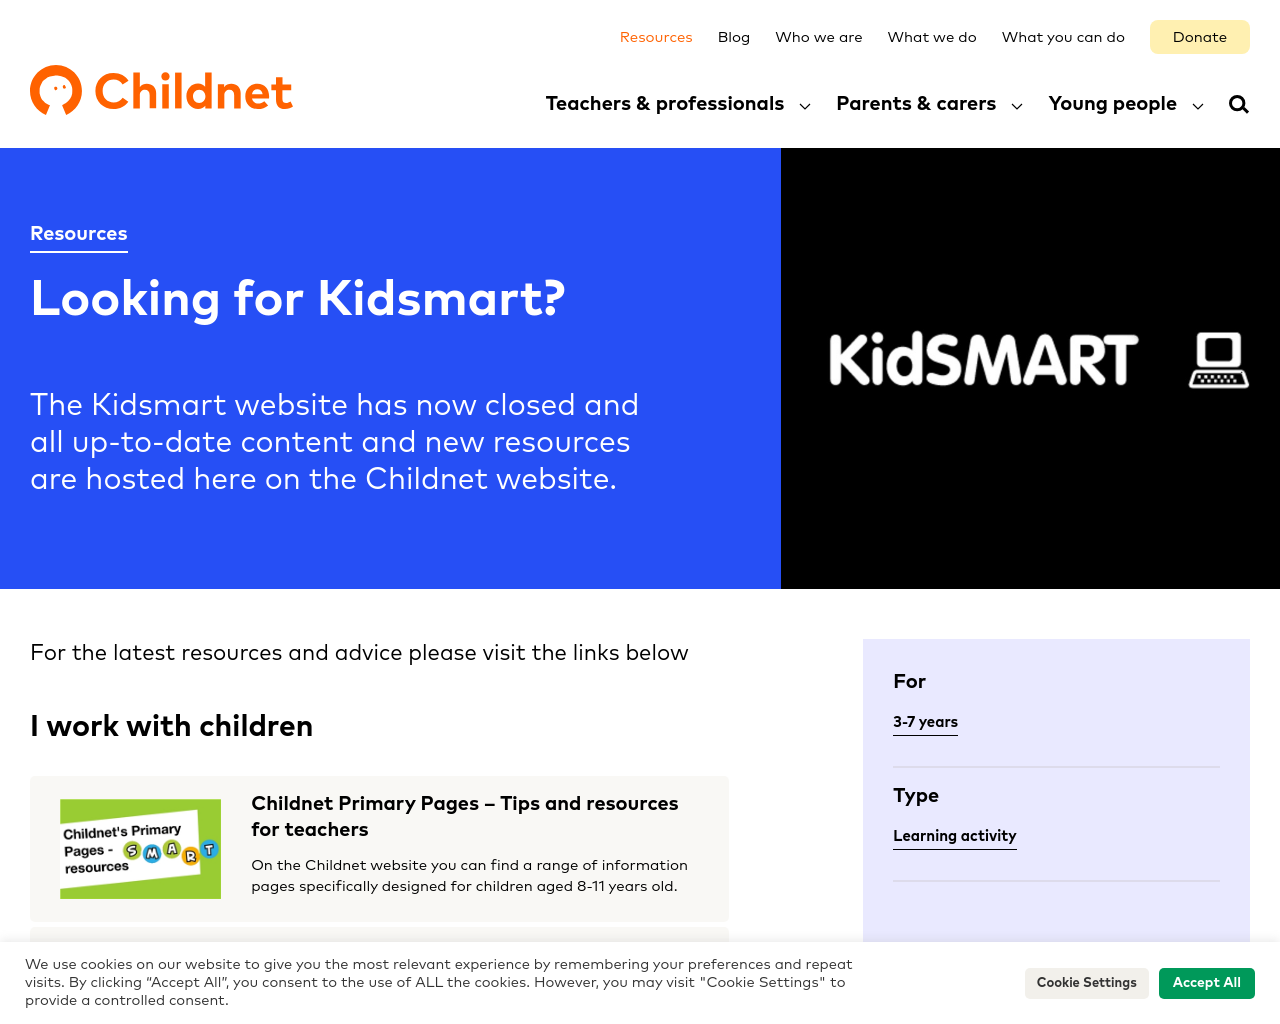 Kidsmart